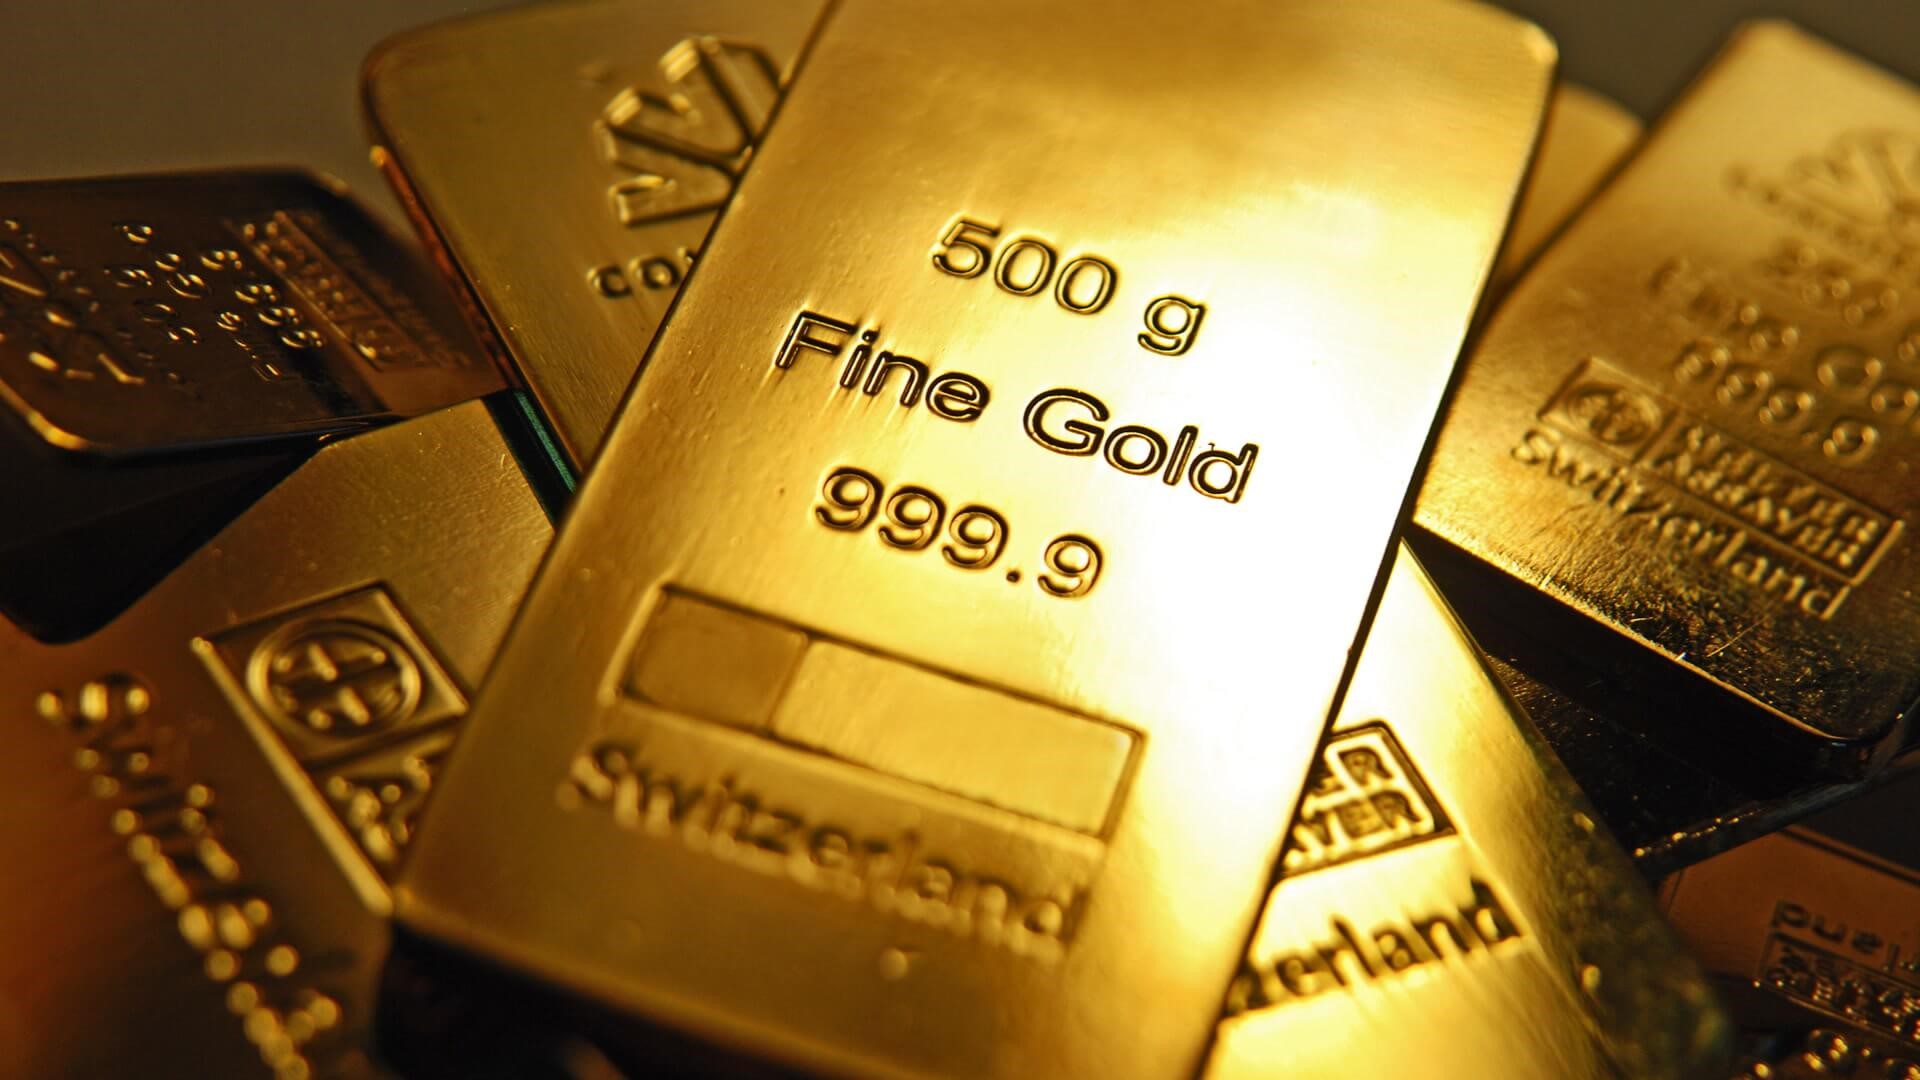 Take gold. Золото бизнес красиво. Еще золота. Почему золото так притягательно.